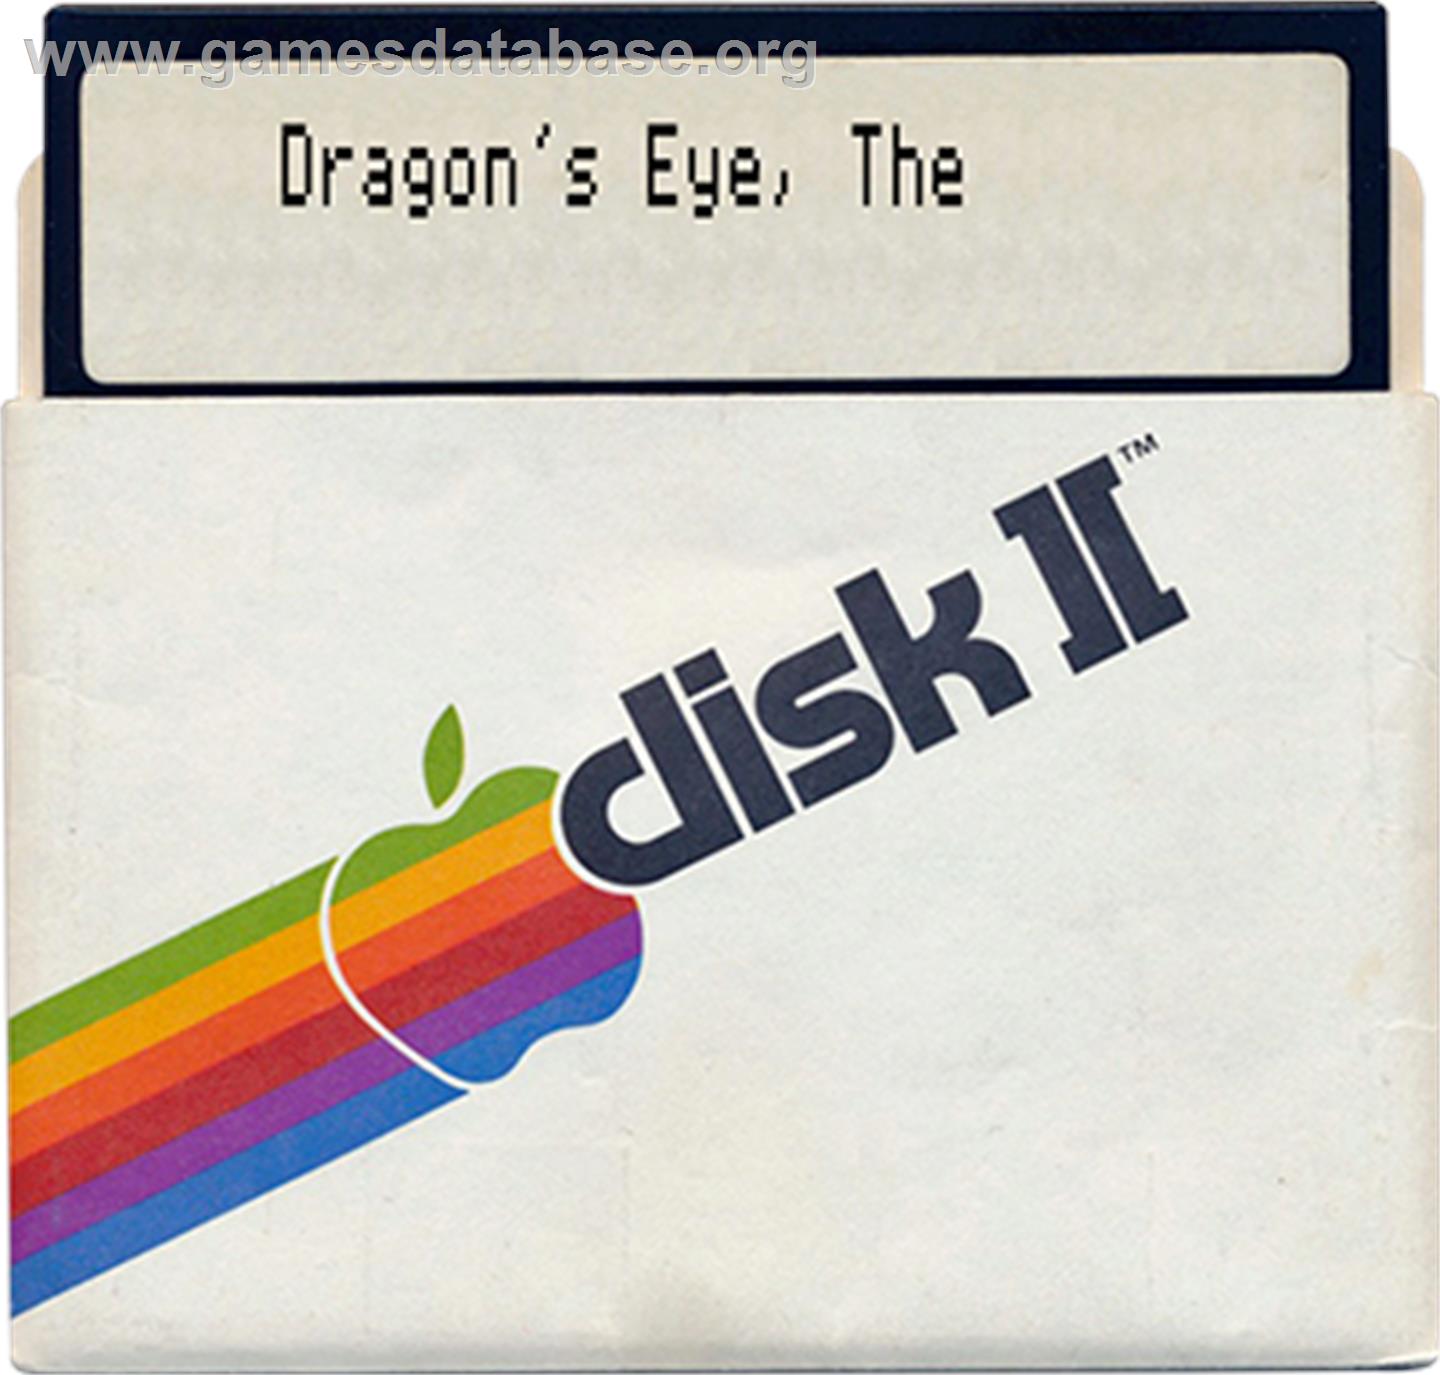 Dragon's Eye - Apple II - Artwork - Disc